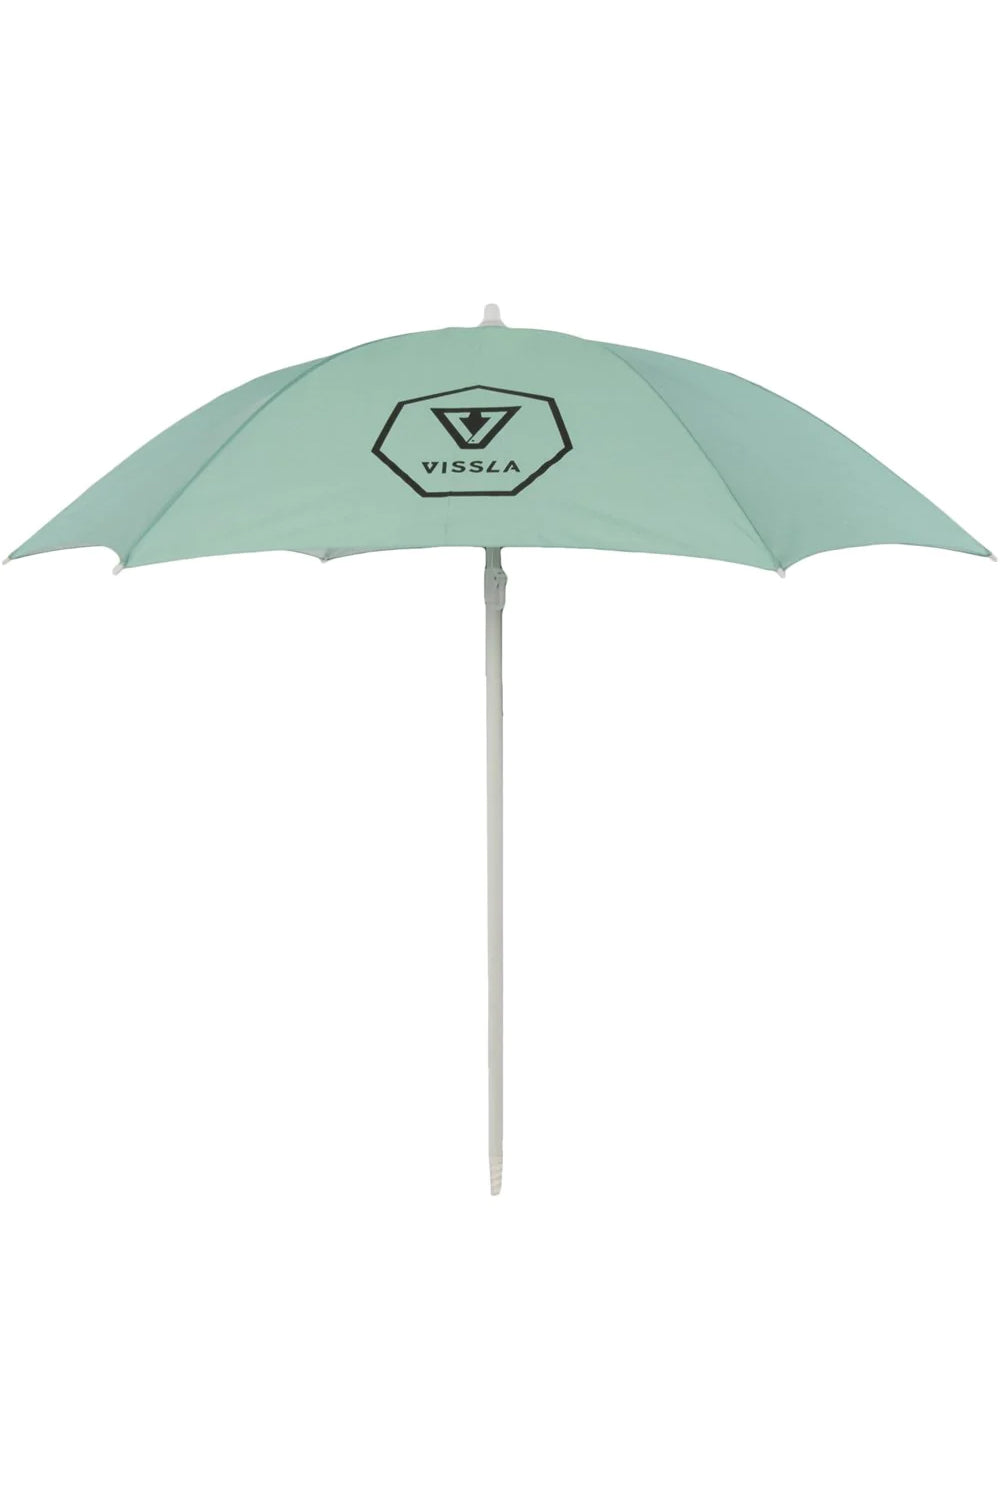 Vissla Beach Umbrella | Sanbah Australia